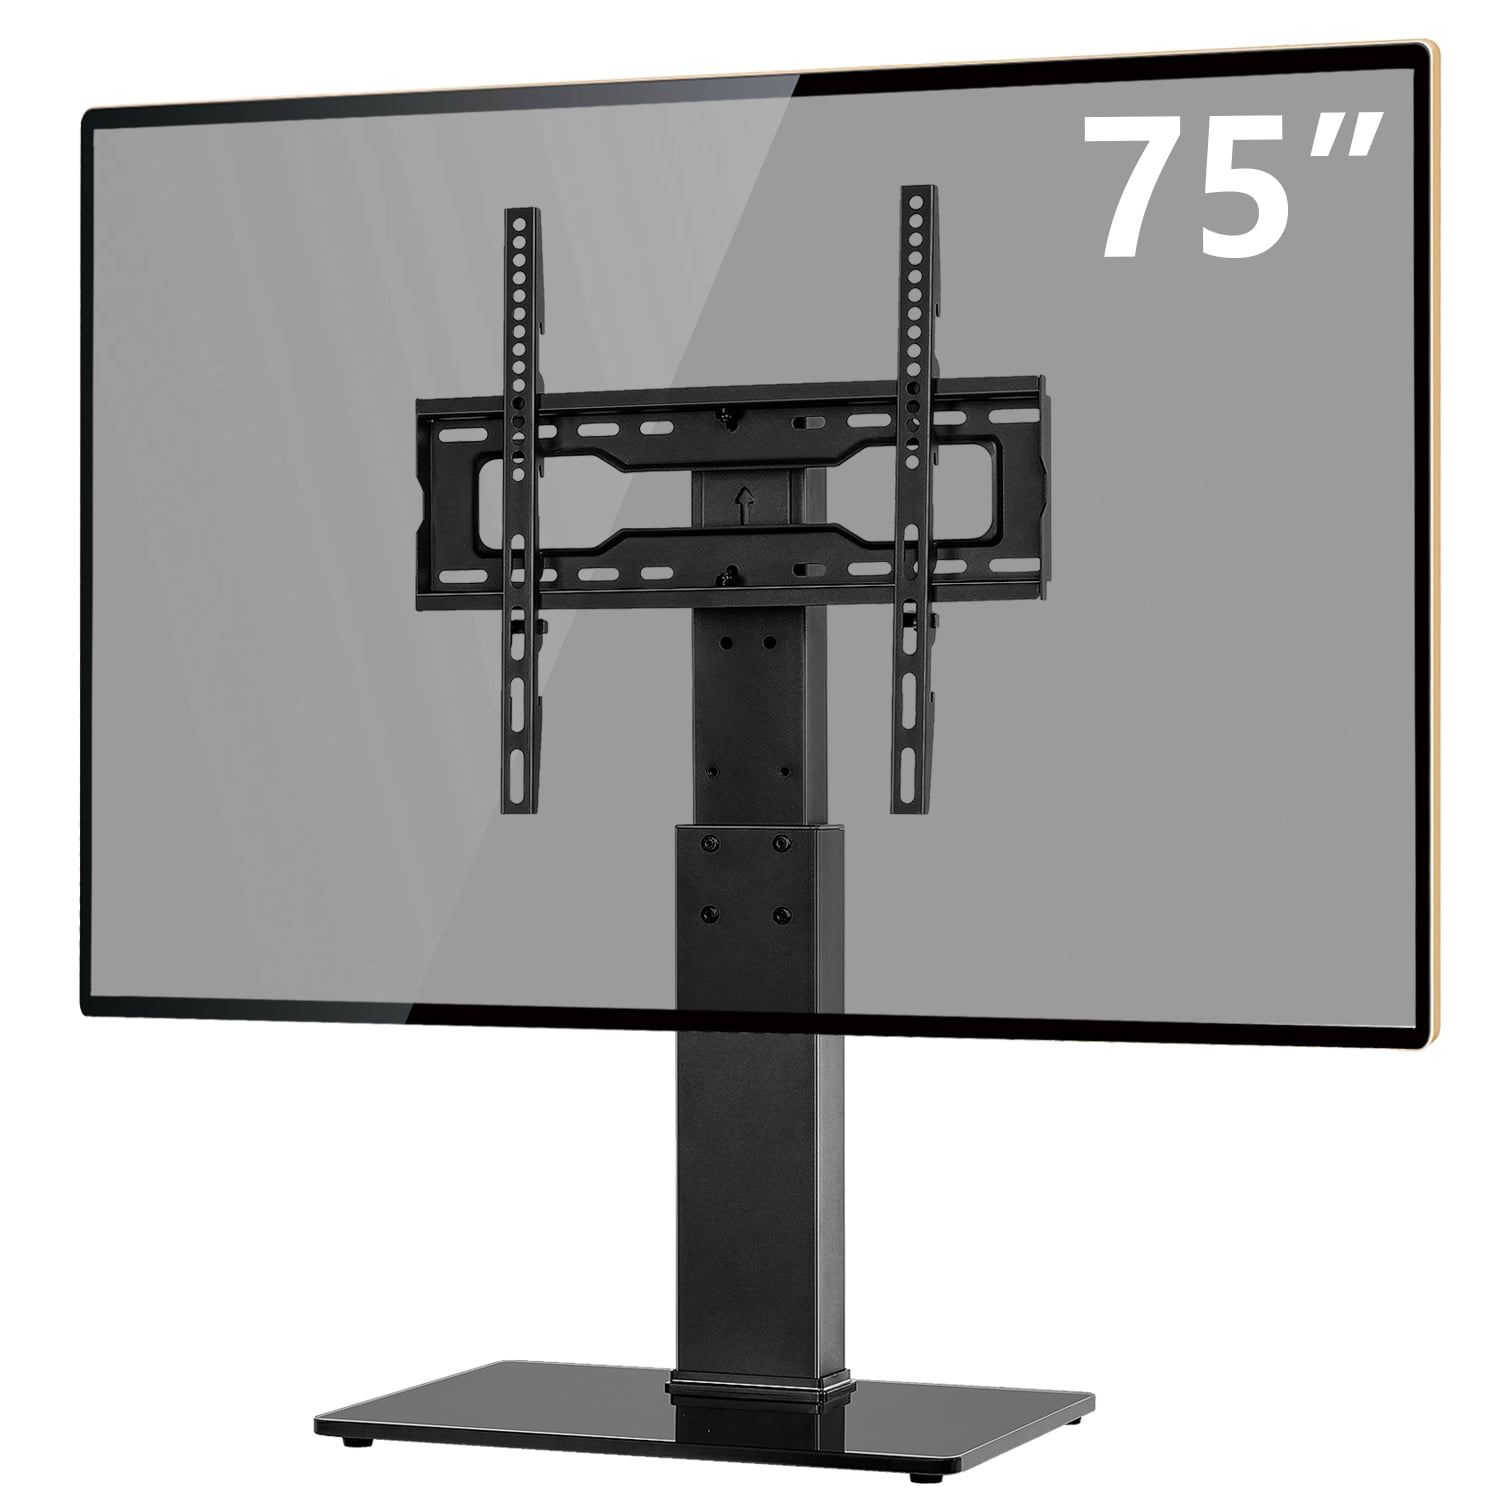 75 tv stand mount - 75 inch tv bracket